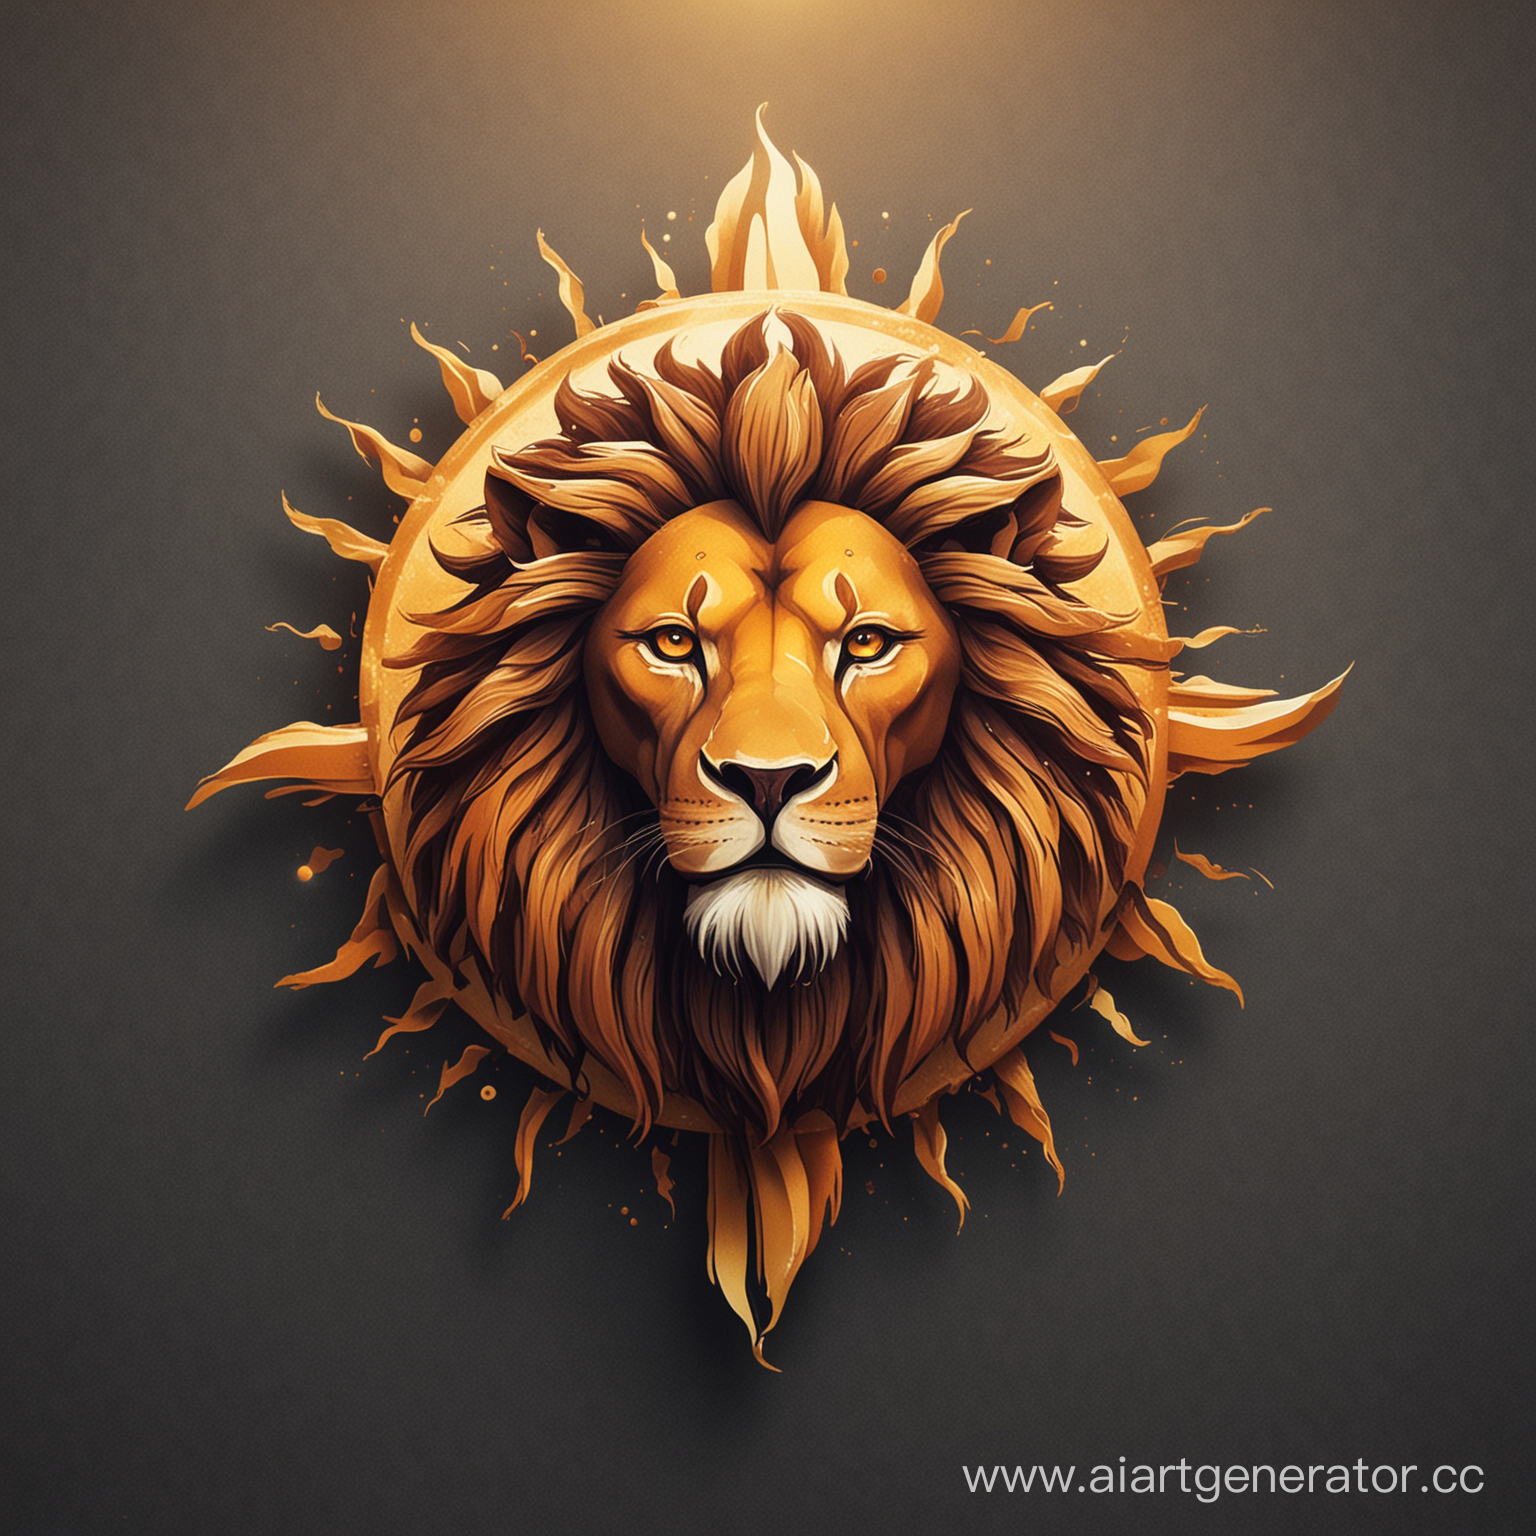 Логотип-аватарка лев и солнце в одном